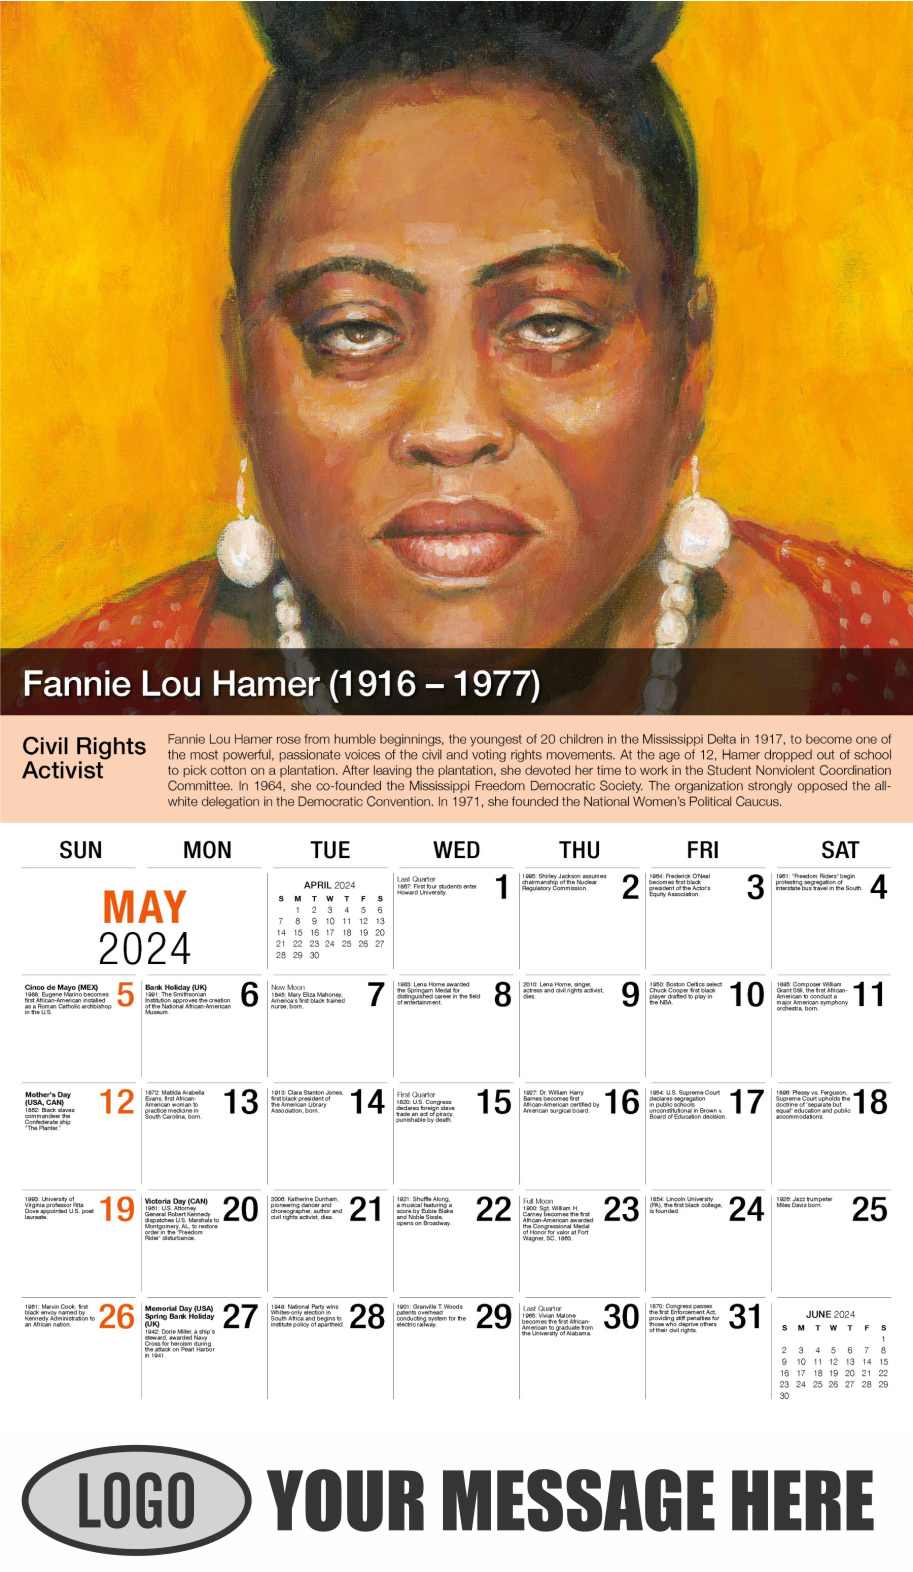 Black History 2024 Business Advertising Calendar - May